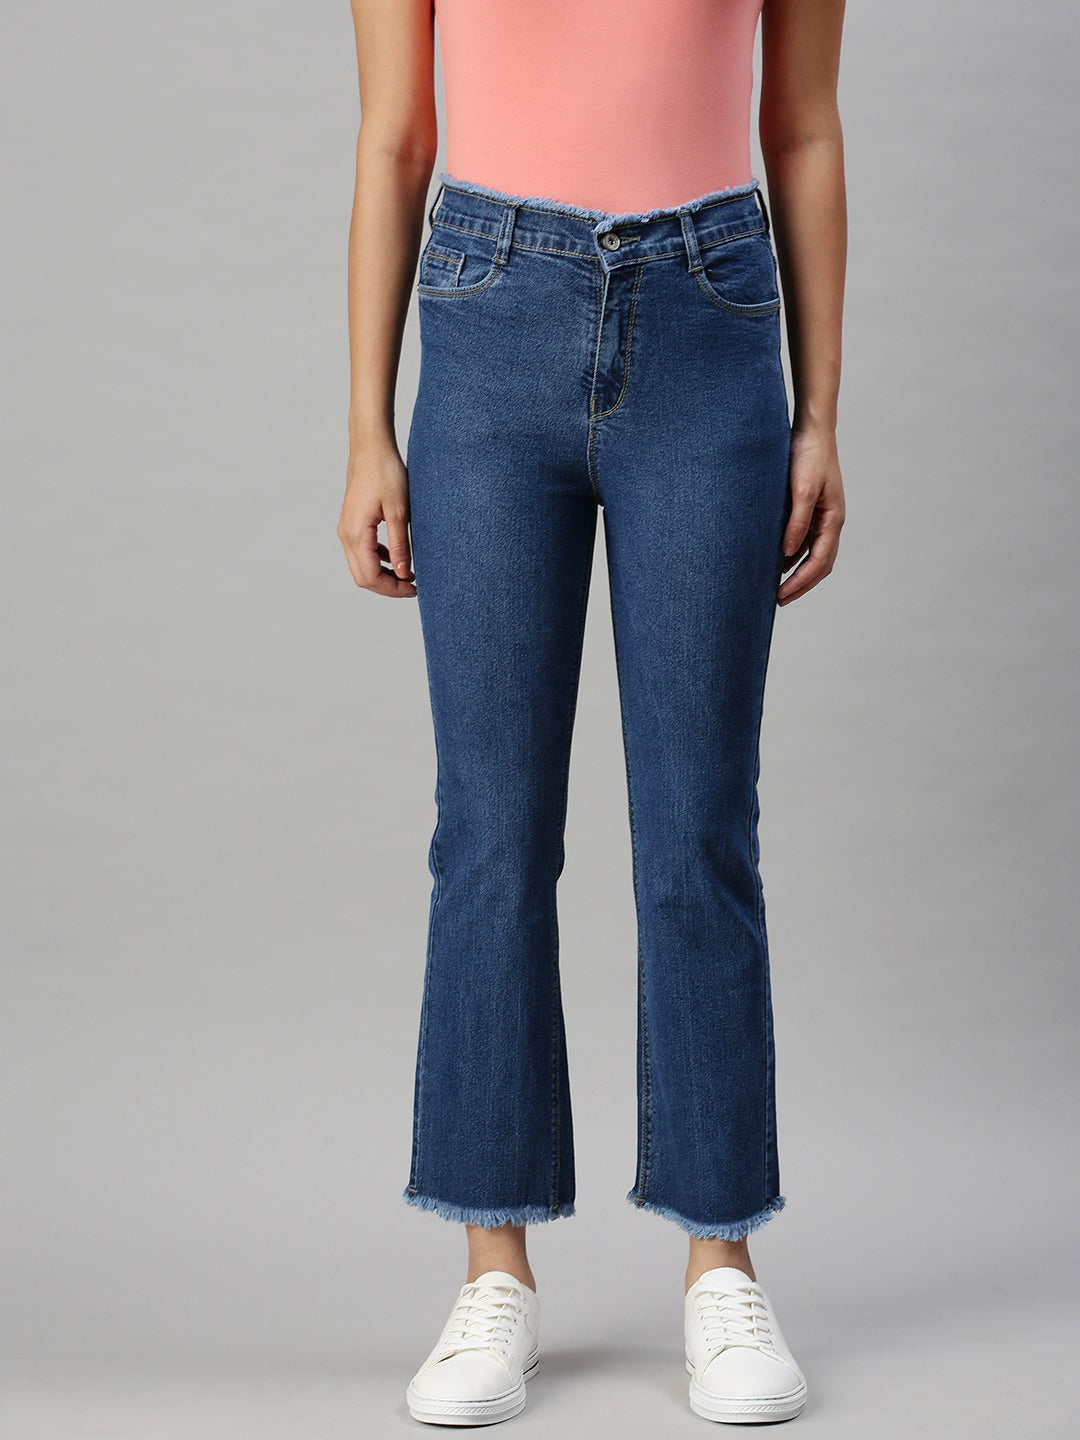 Women's Denim Straight Fit Navy Blue Jeans